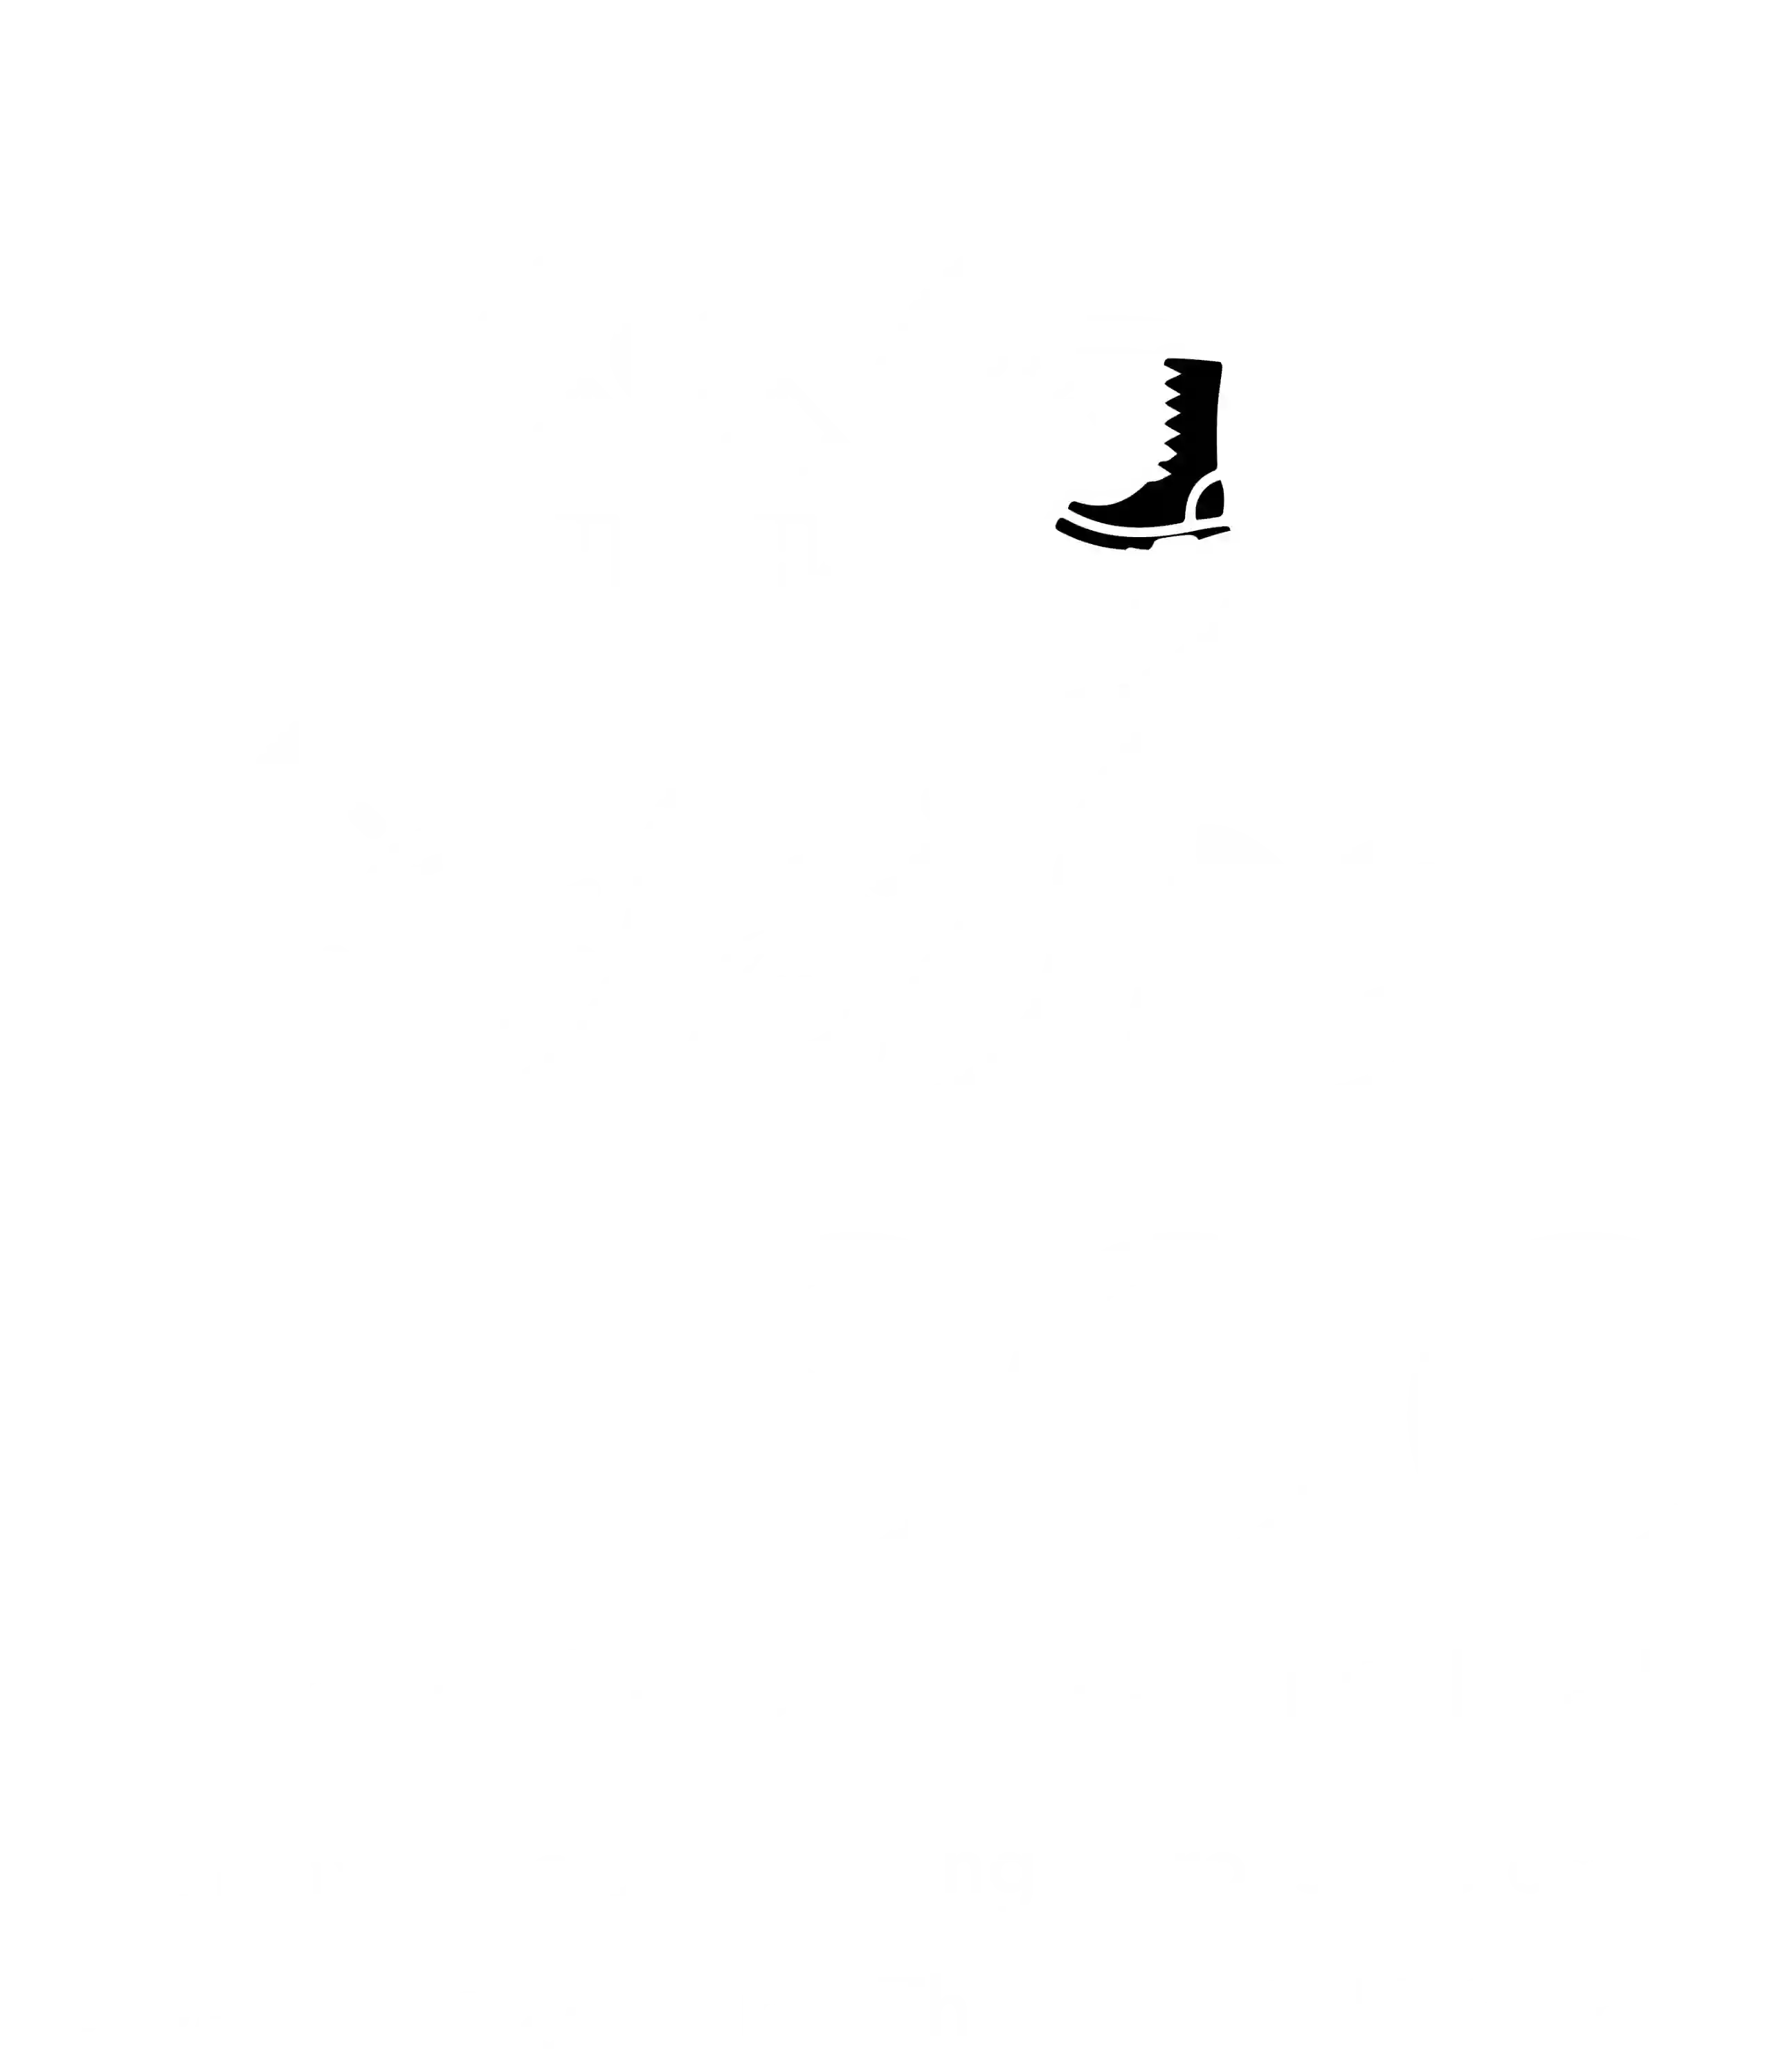 Nursing & Therapy Services of Colorado (NTSOC)